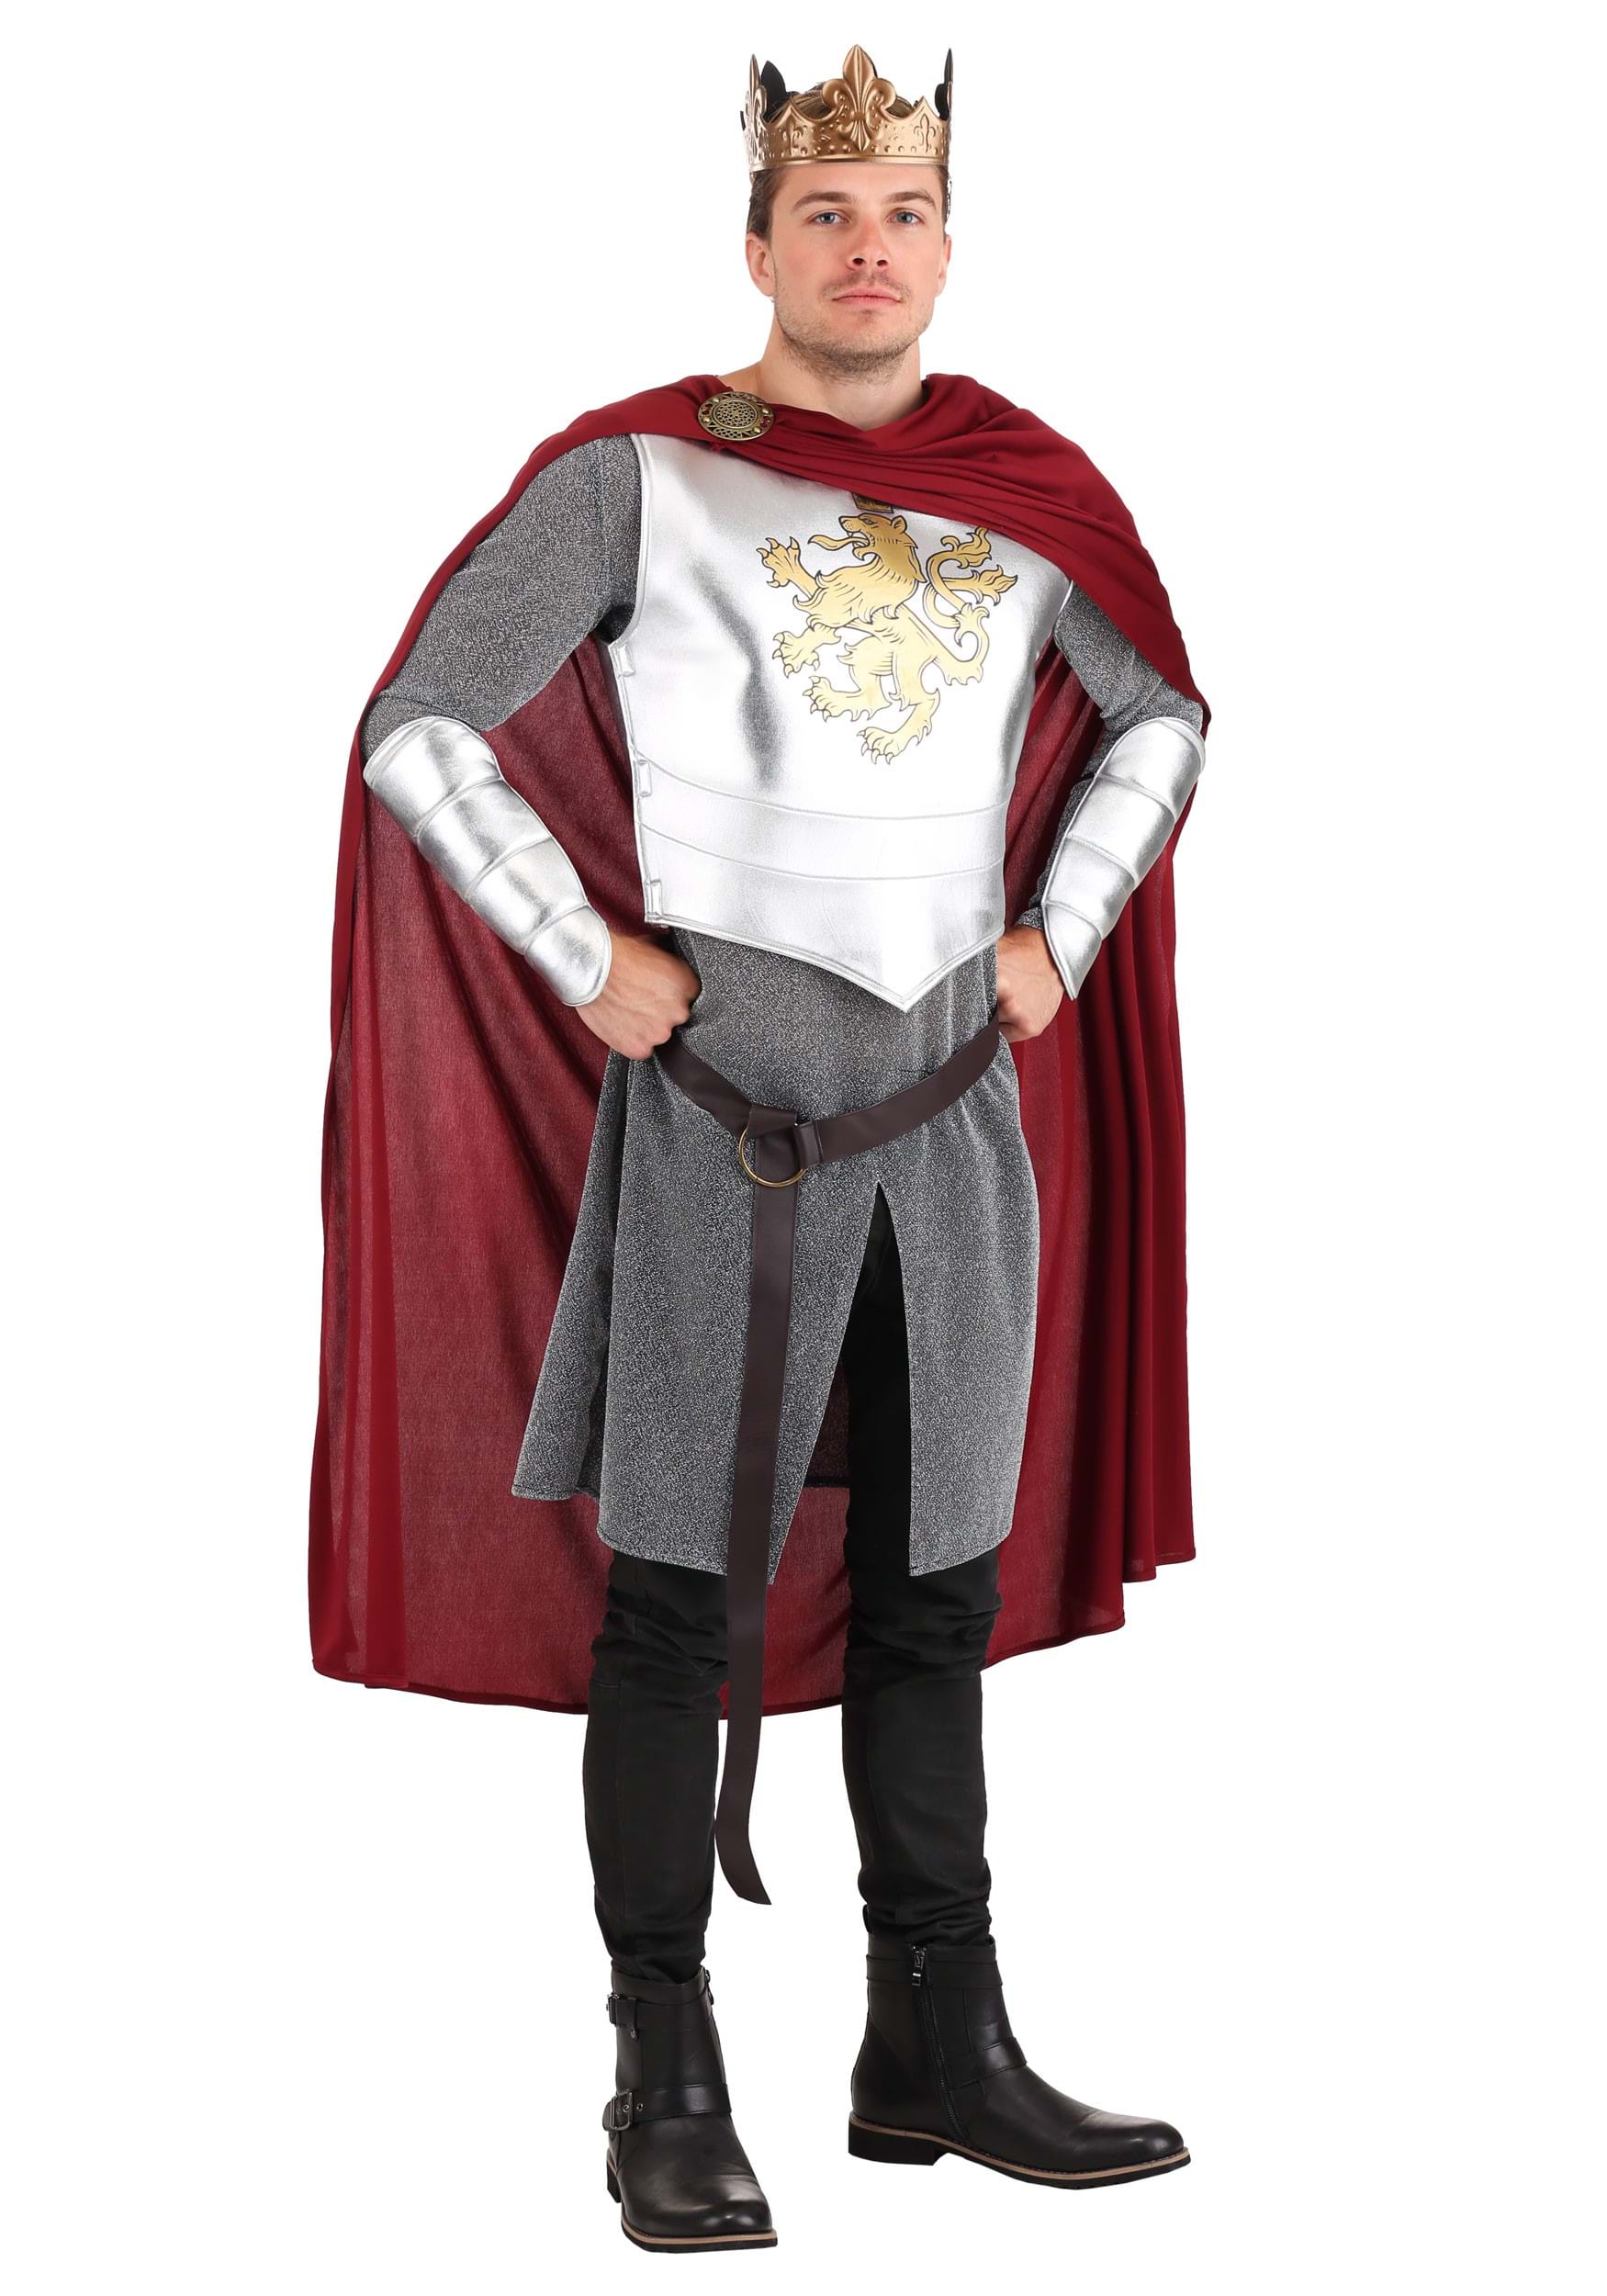 Photos - Fancy Dress Knight FUN Costumes Lionheart  Men's Costume Red/Gray FUN1065AD 